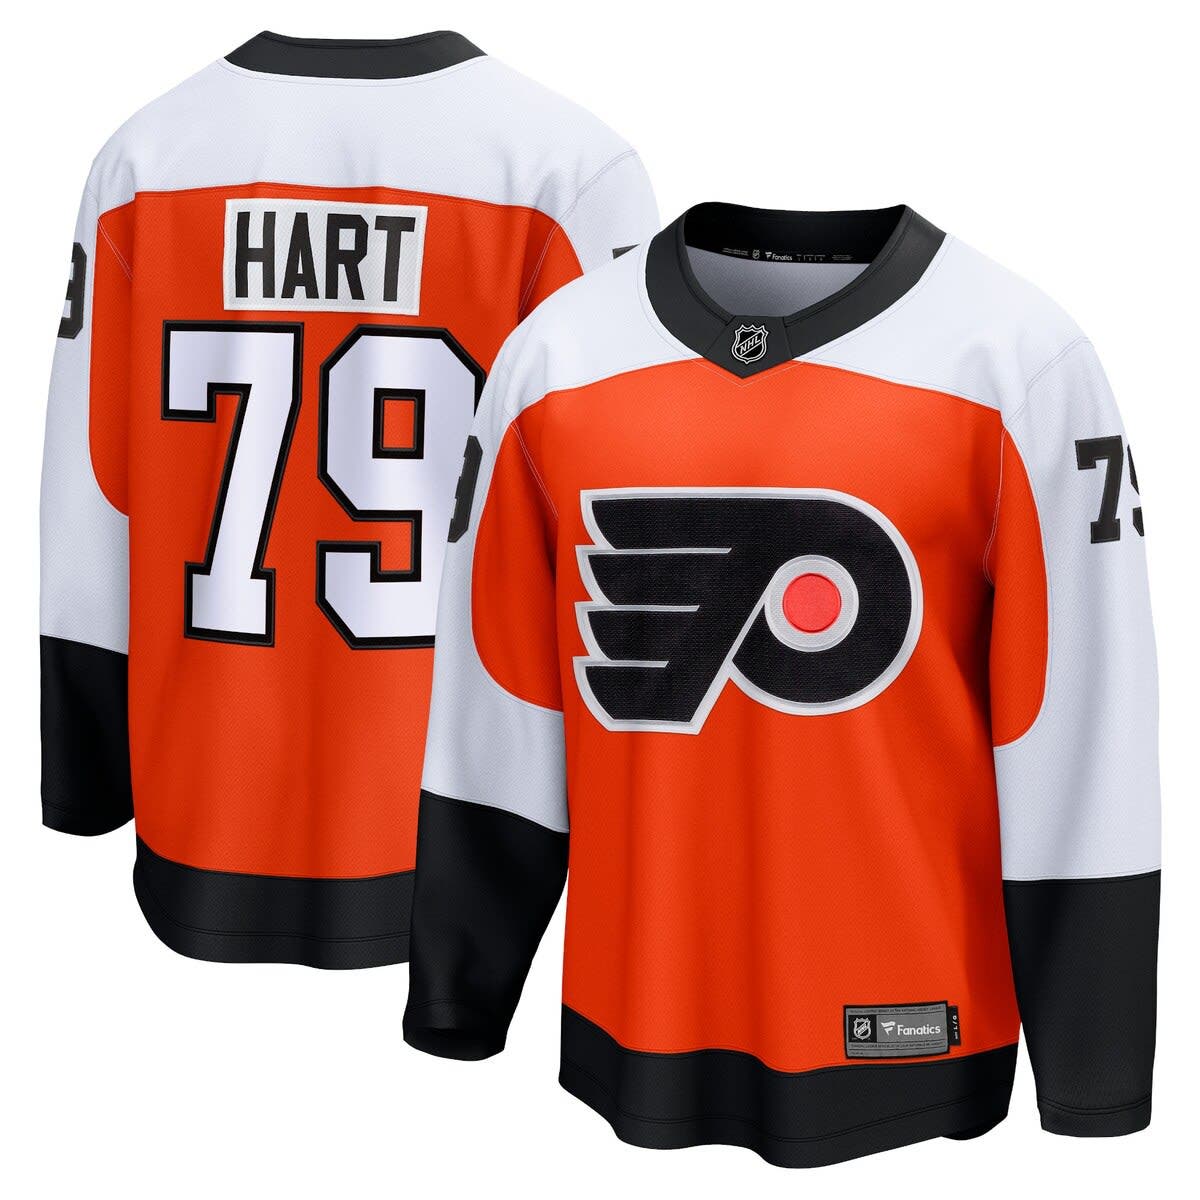 Pete Hart replica jersey